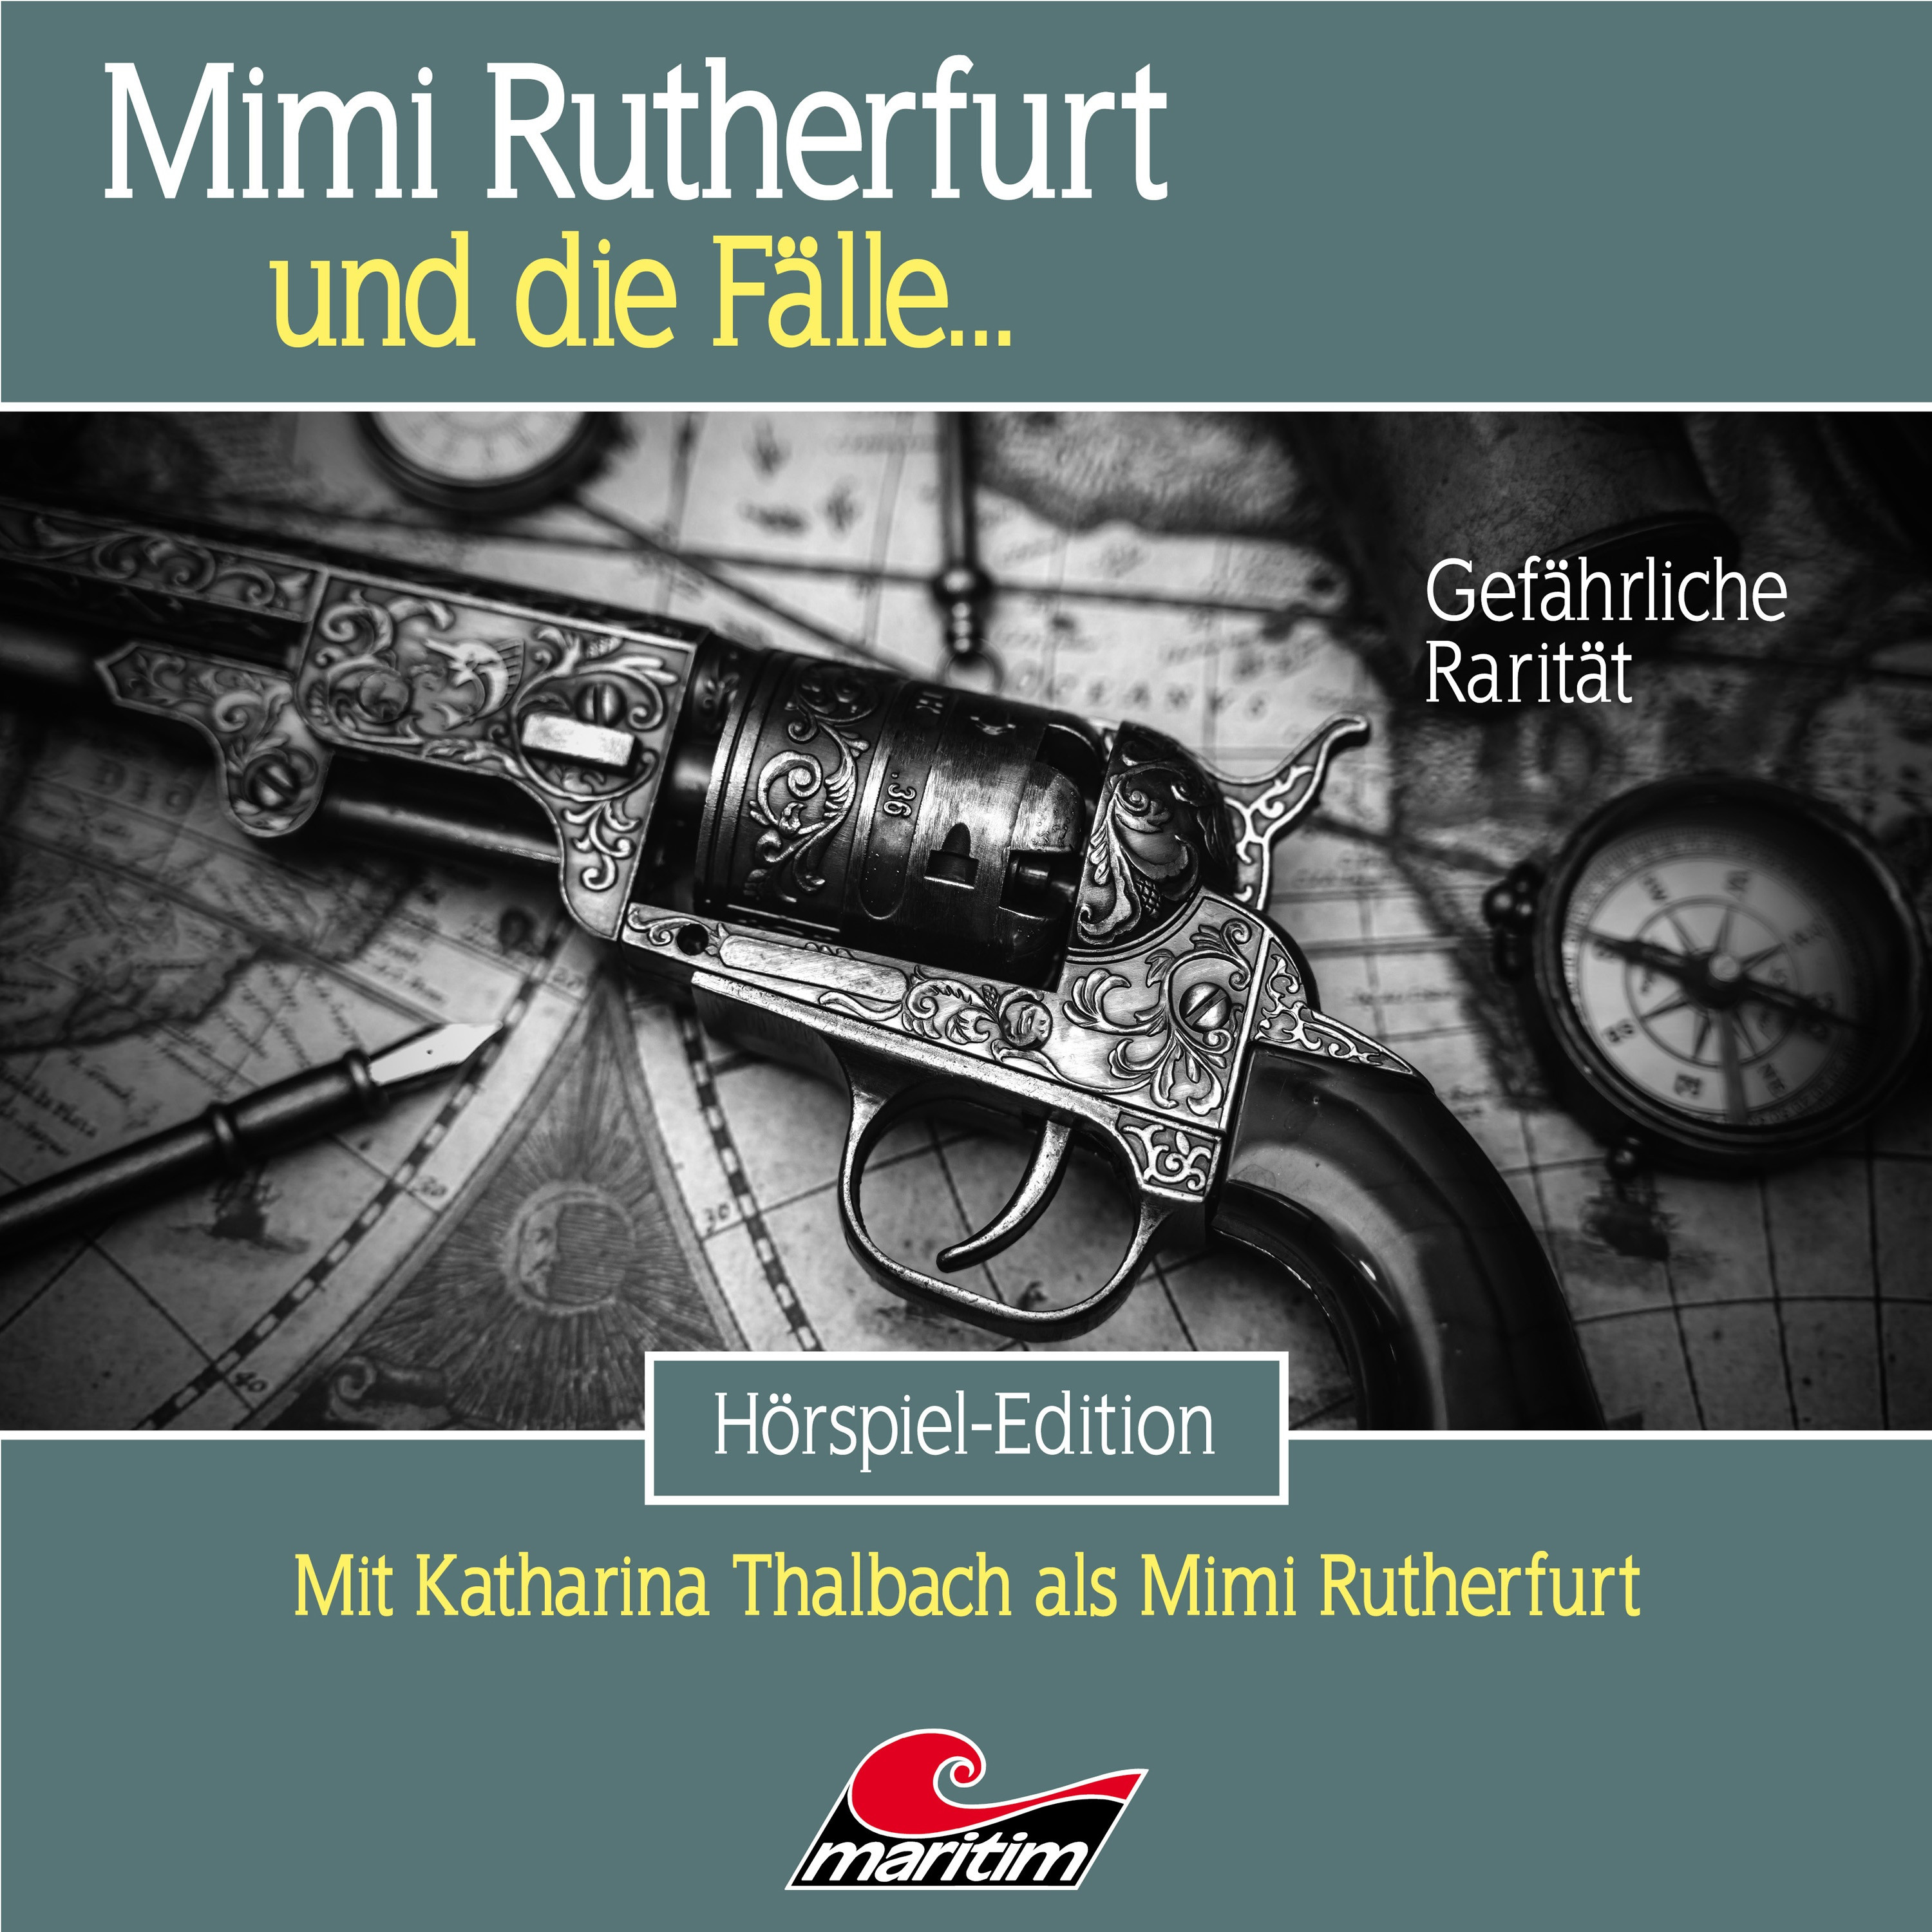 Mimi Rutherfurt 53: Gefährliche Rarität